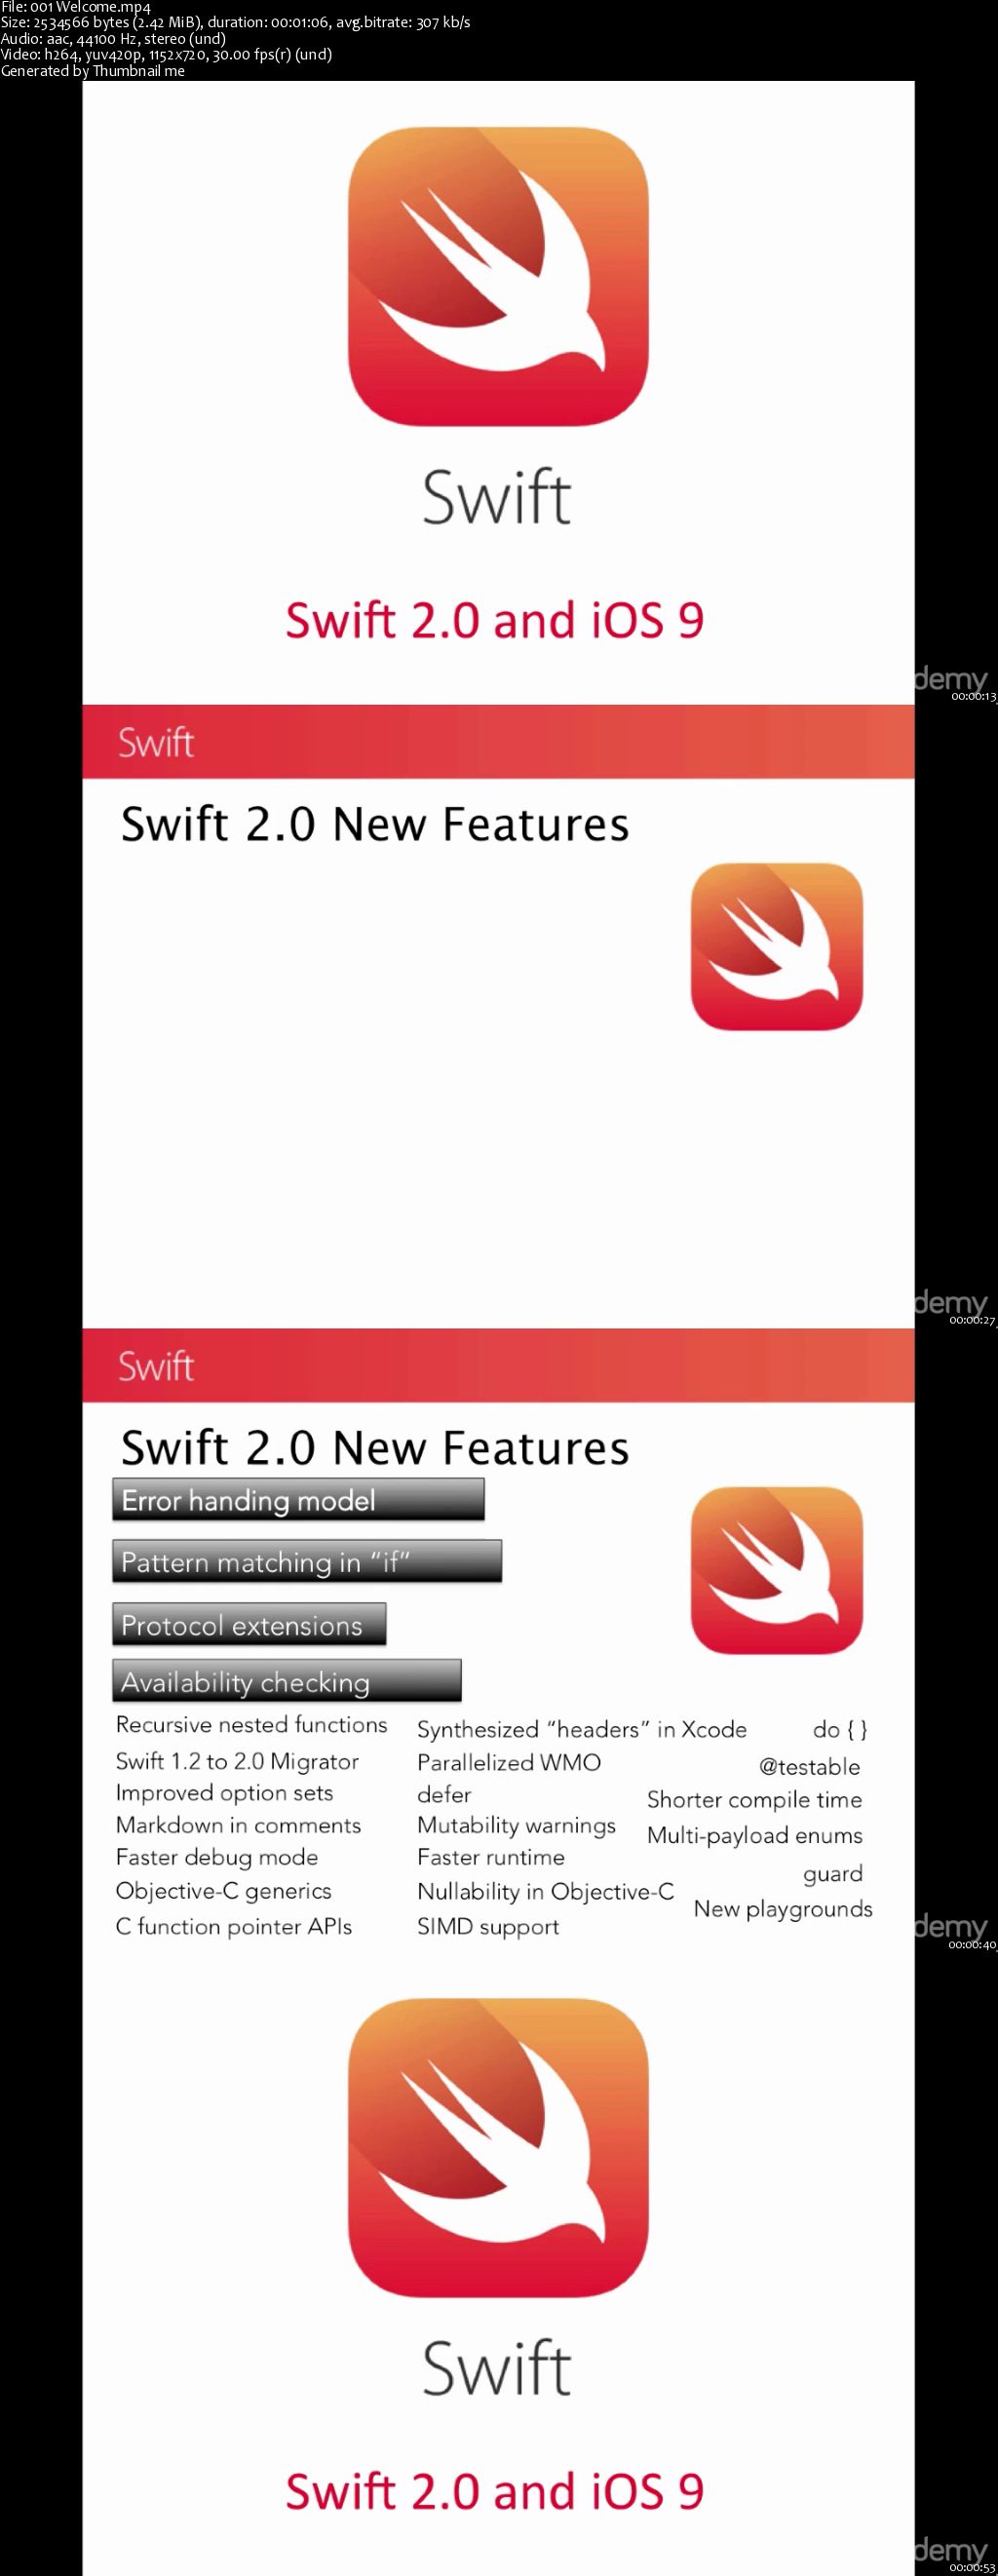 (NEW)The Complete Swift 2.0 Developer Course 2016 - (Pro)